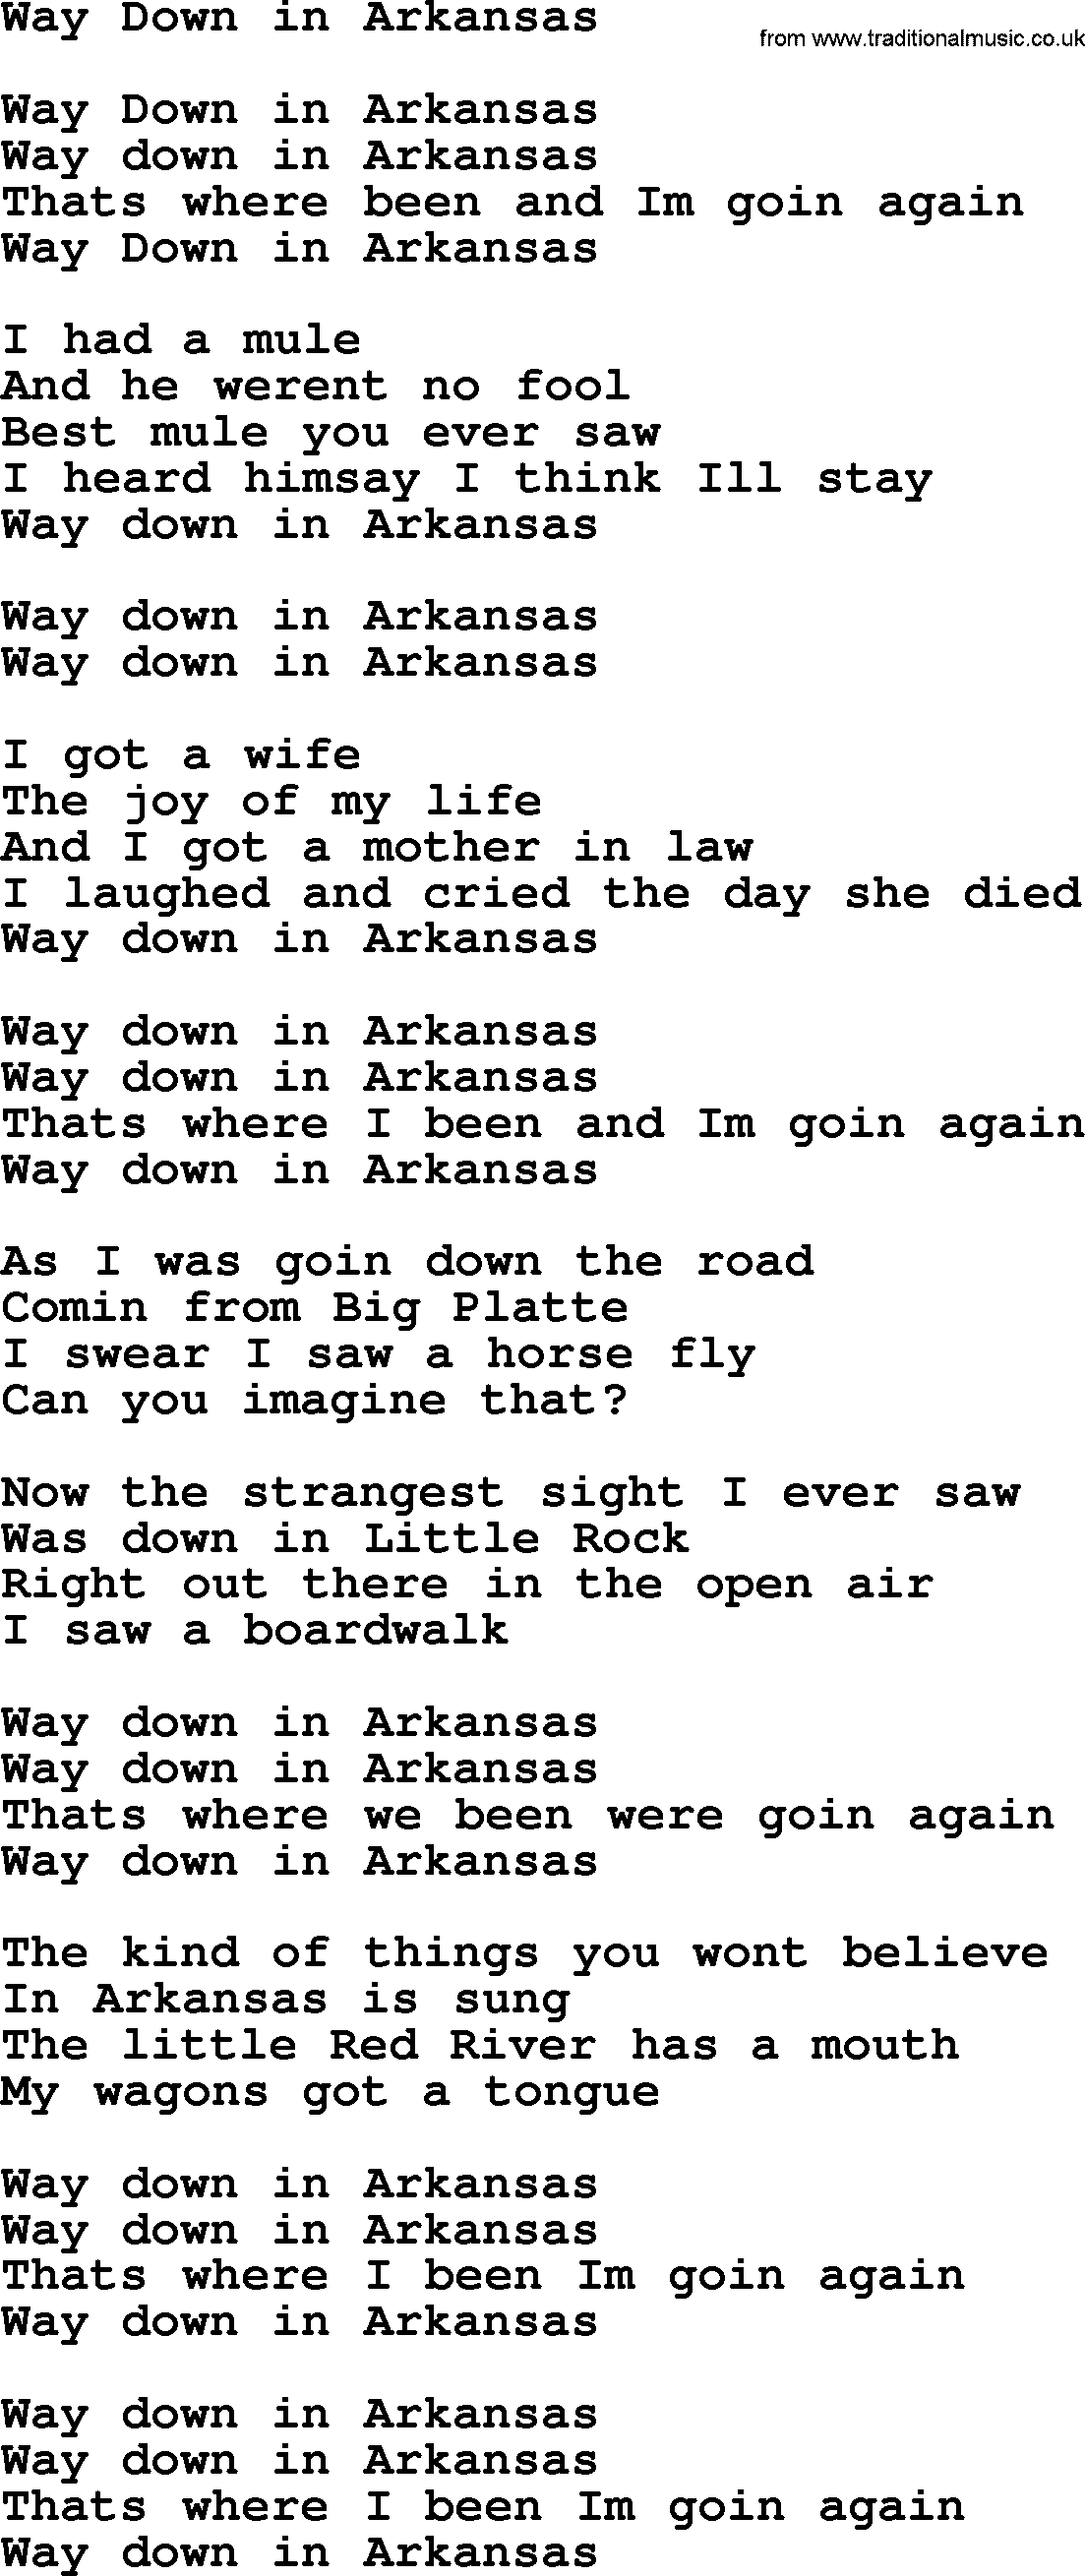 The Byrds song Way Down In Arkansas, lyrics